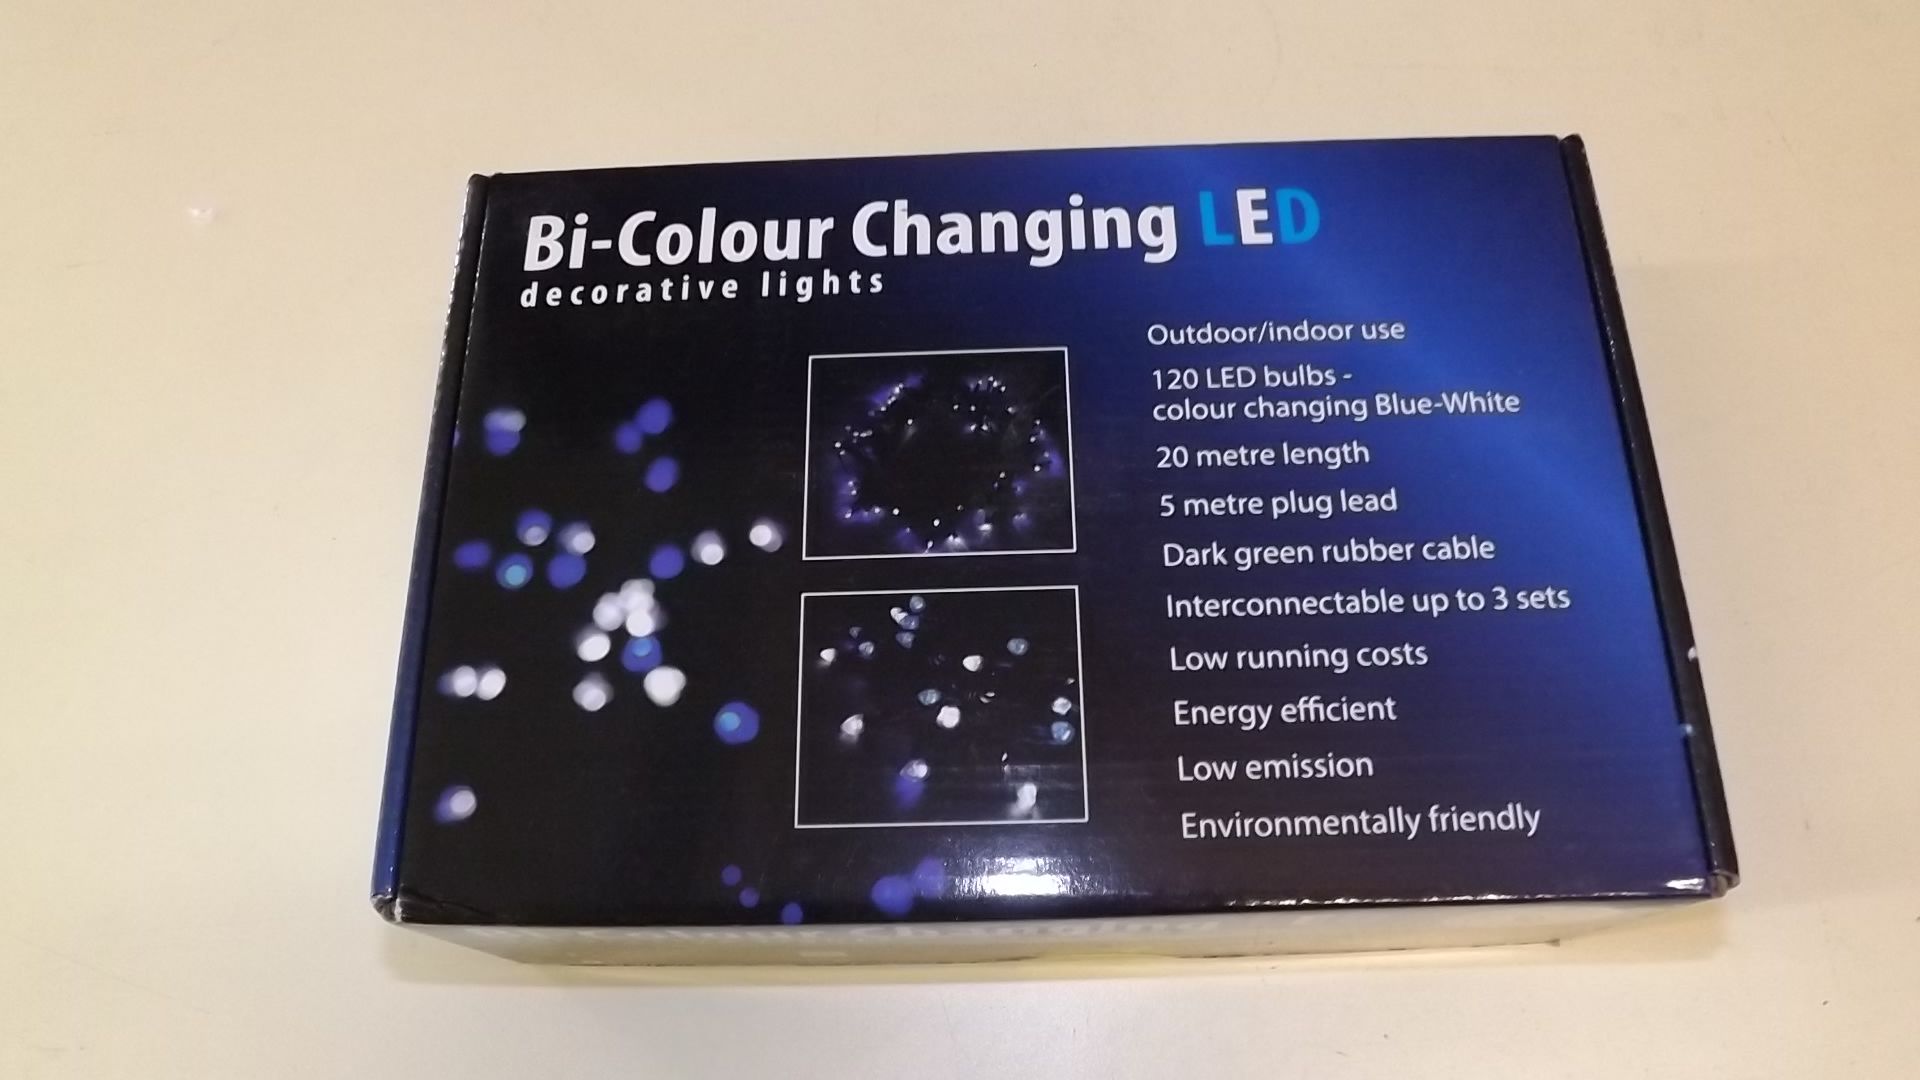 1 BOX OF BI-COLOUR CHANGING LED DECORATIVE LIGHTS RRP £42.99